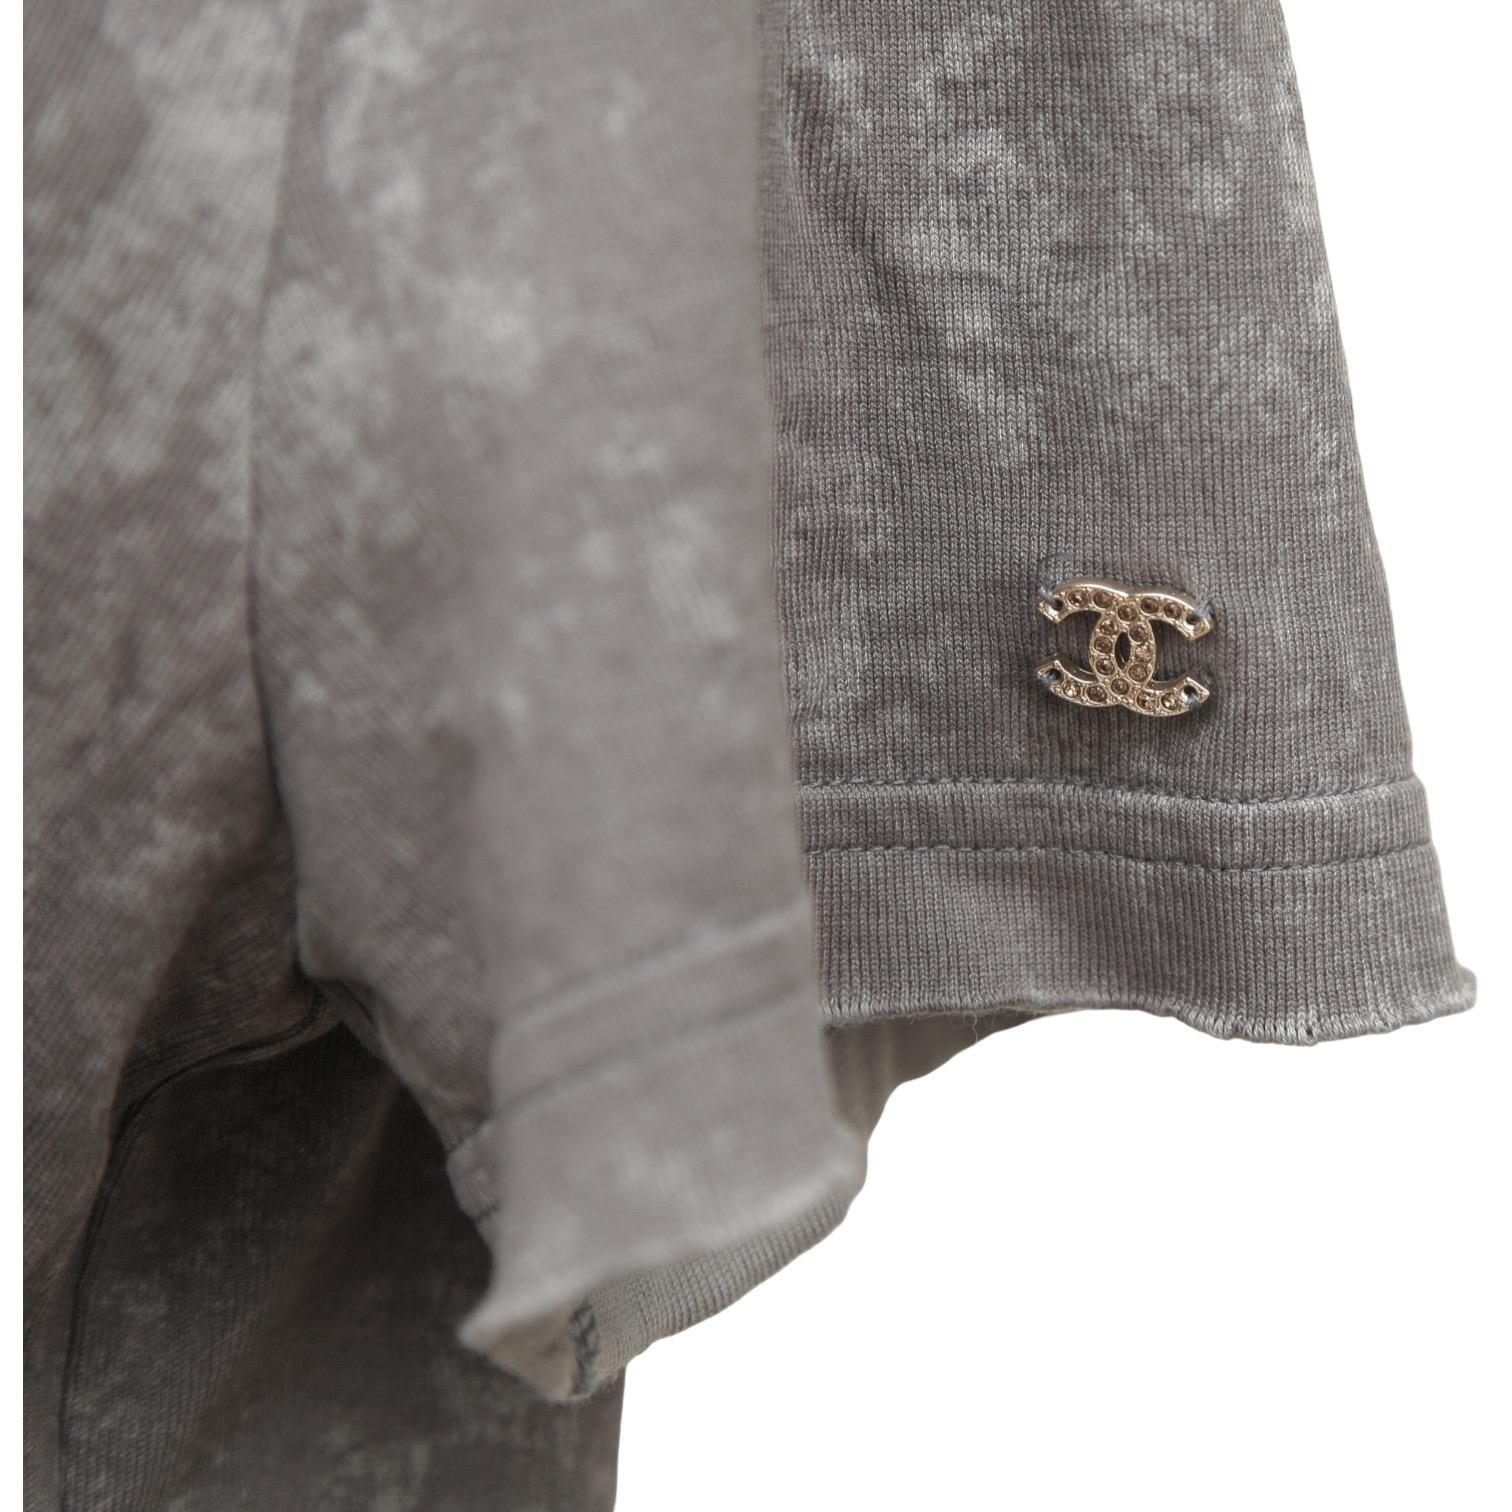 Women's CHANEL Grey T-Shirt Top Shirt Short Sleeve Crew Neck Tie-Dye 34/36 2020